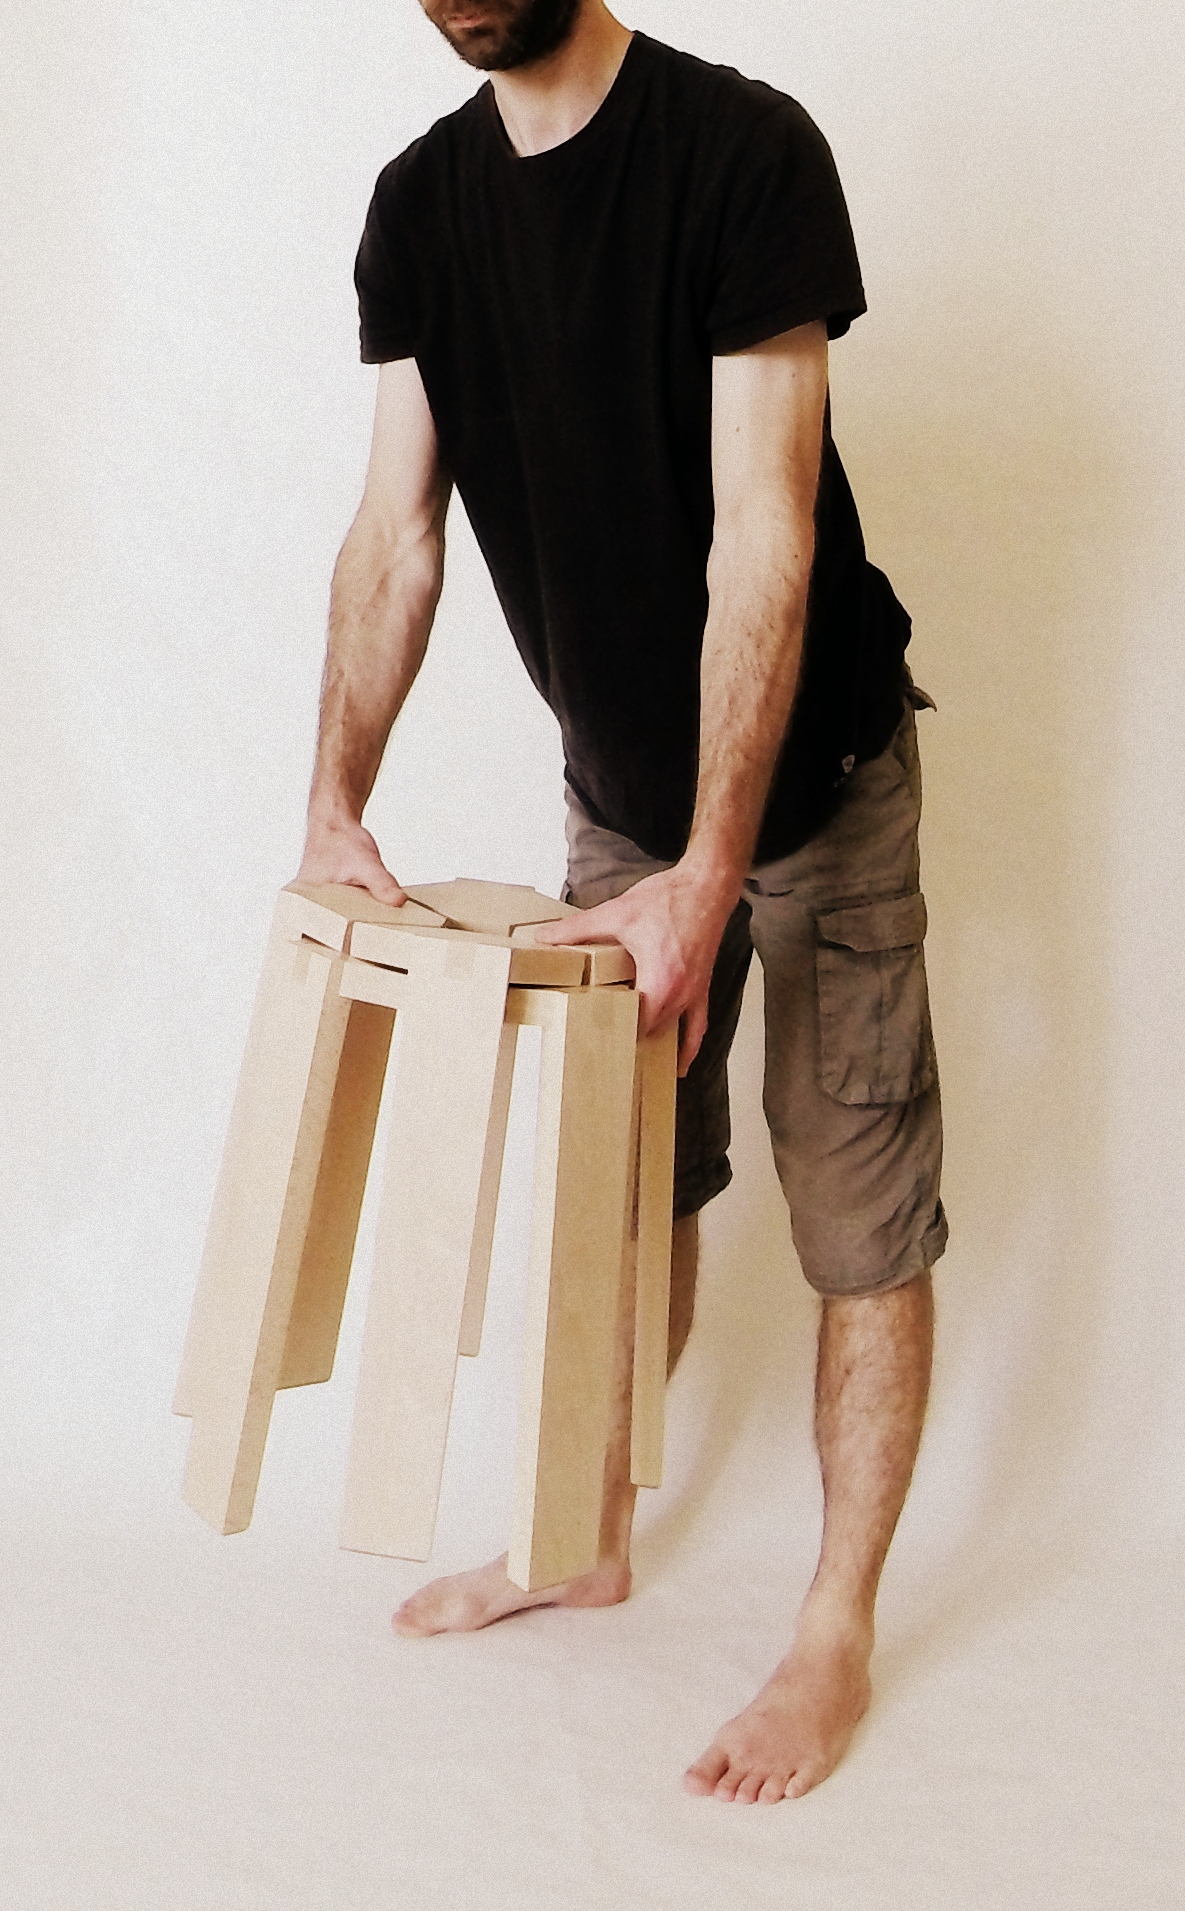 furniture design stool wood woodwork